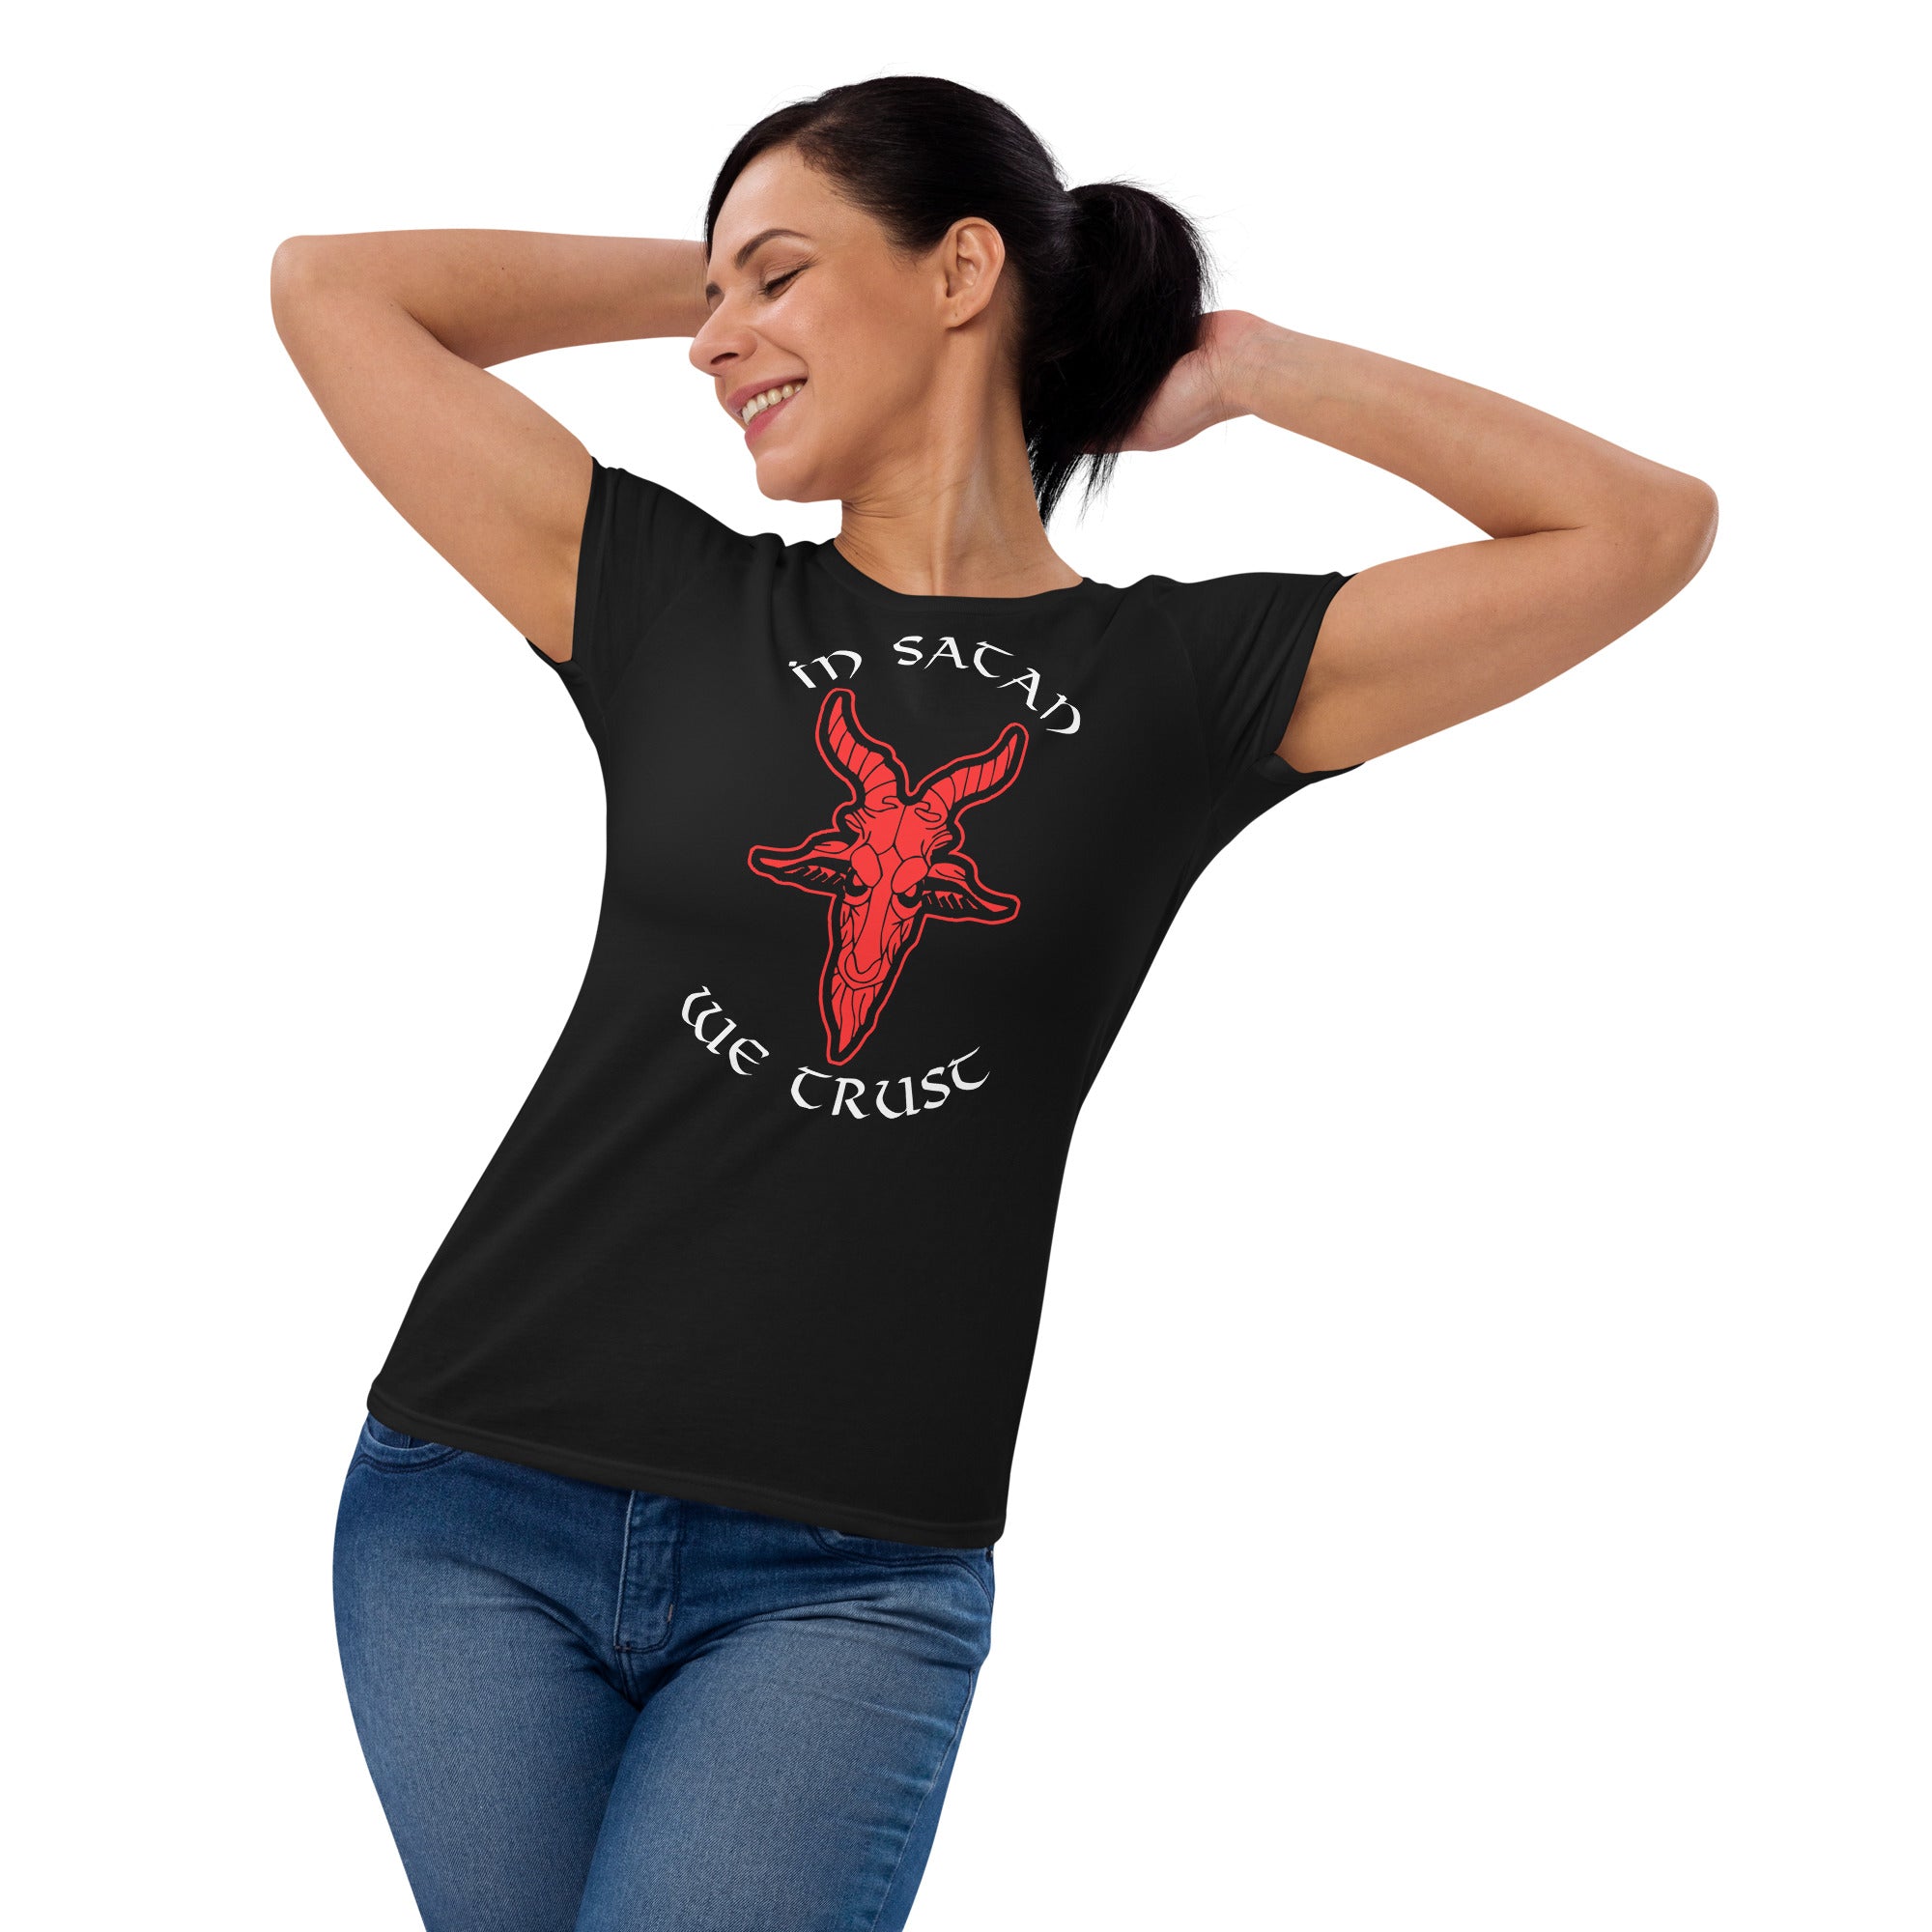 In Satan We Trust 666 Goat Head Occult Women's Short Sleeve Babydoll T-shirt